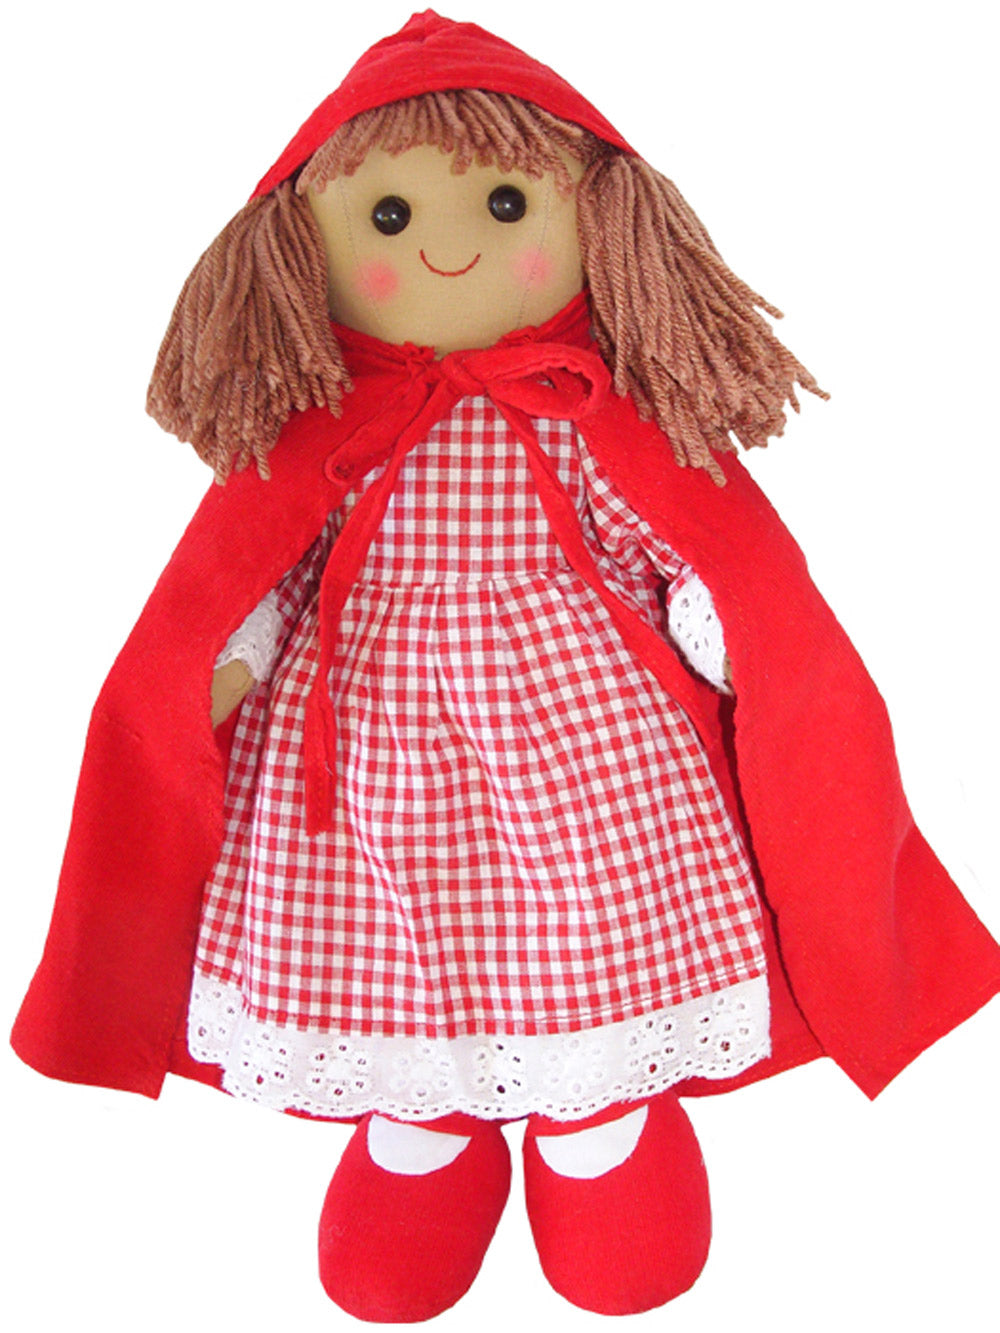 Red Riding Rag Doll